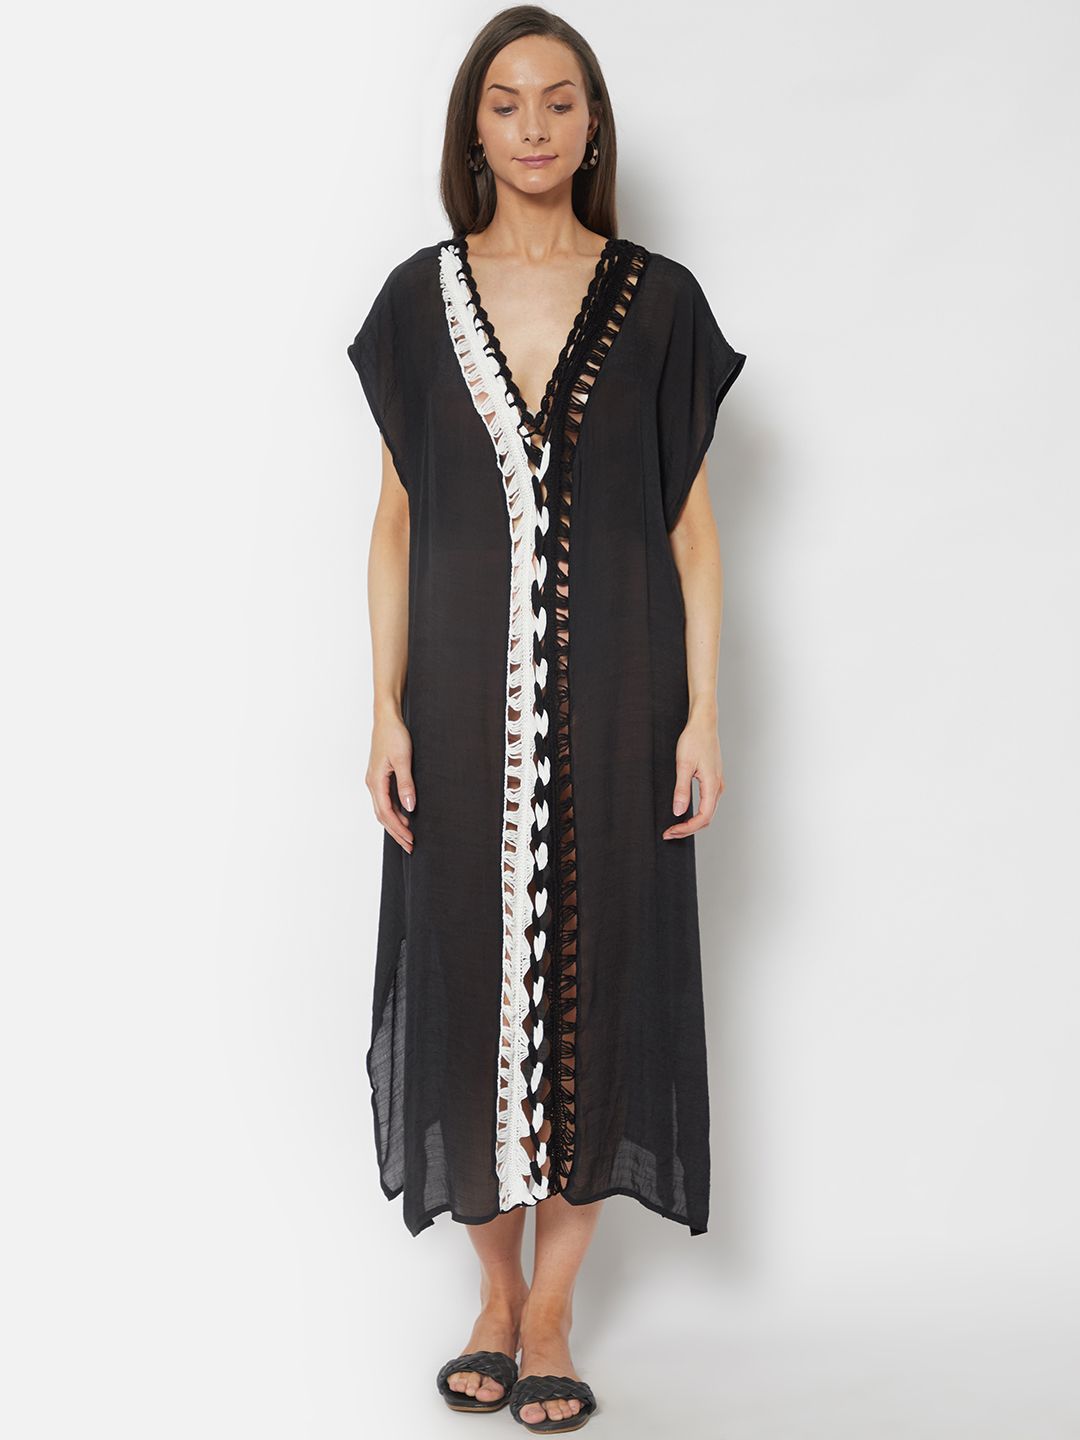 URBANIC Black & White Crochet Swim Cover Up A-Line Dress Price in India